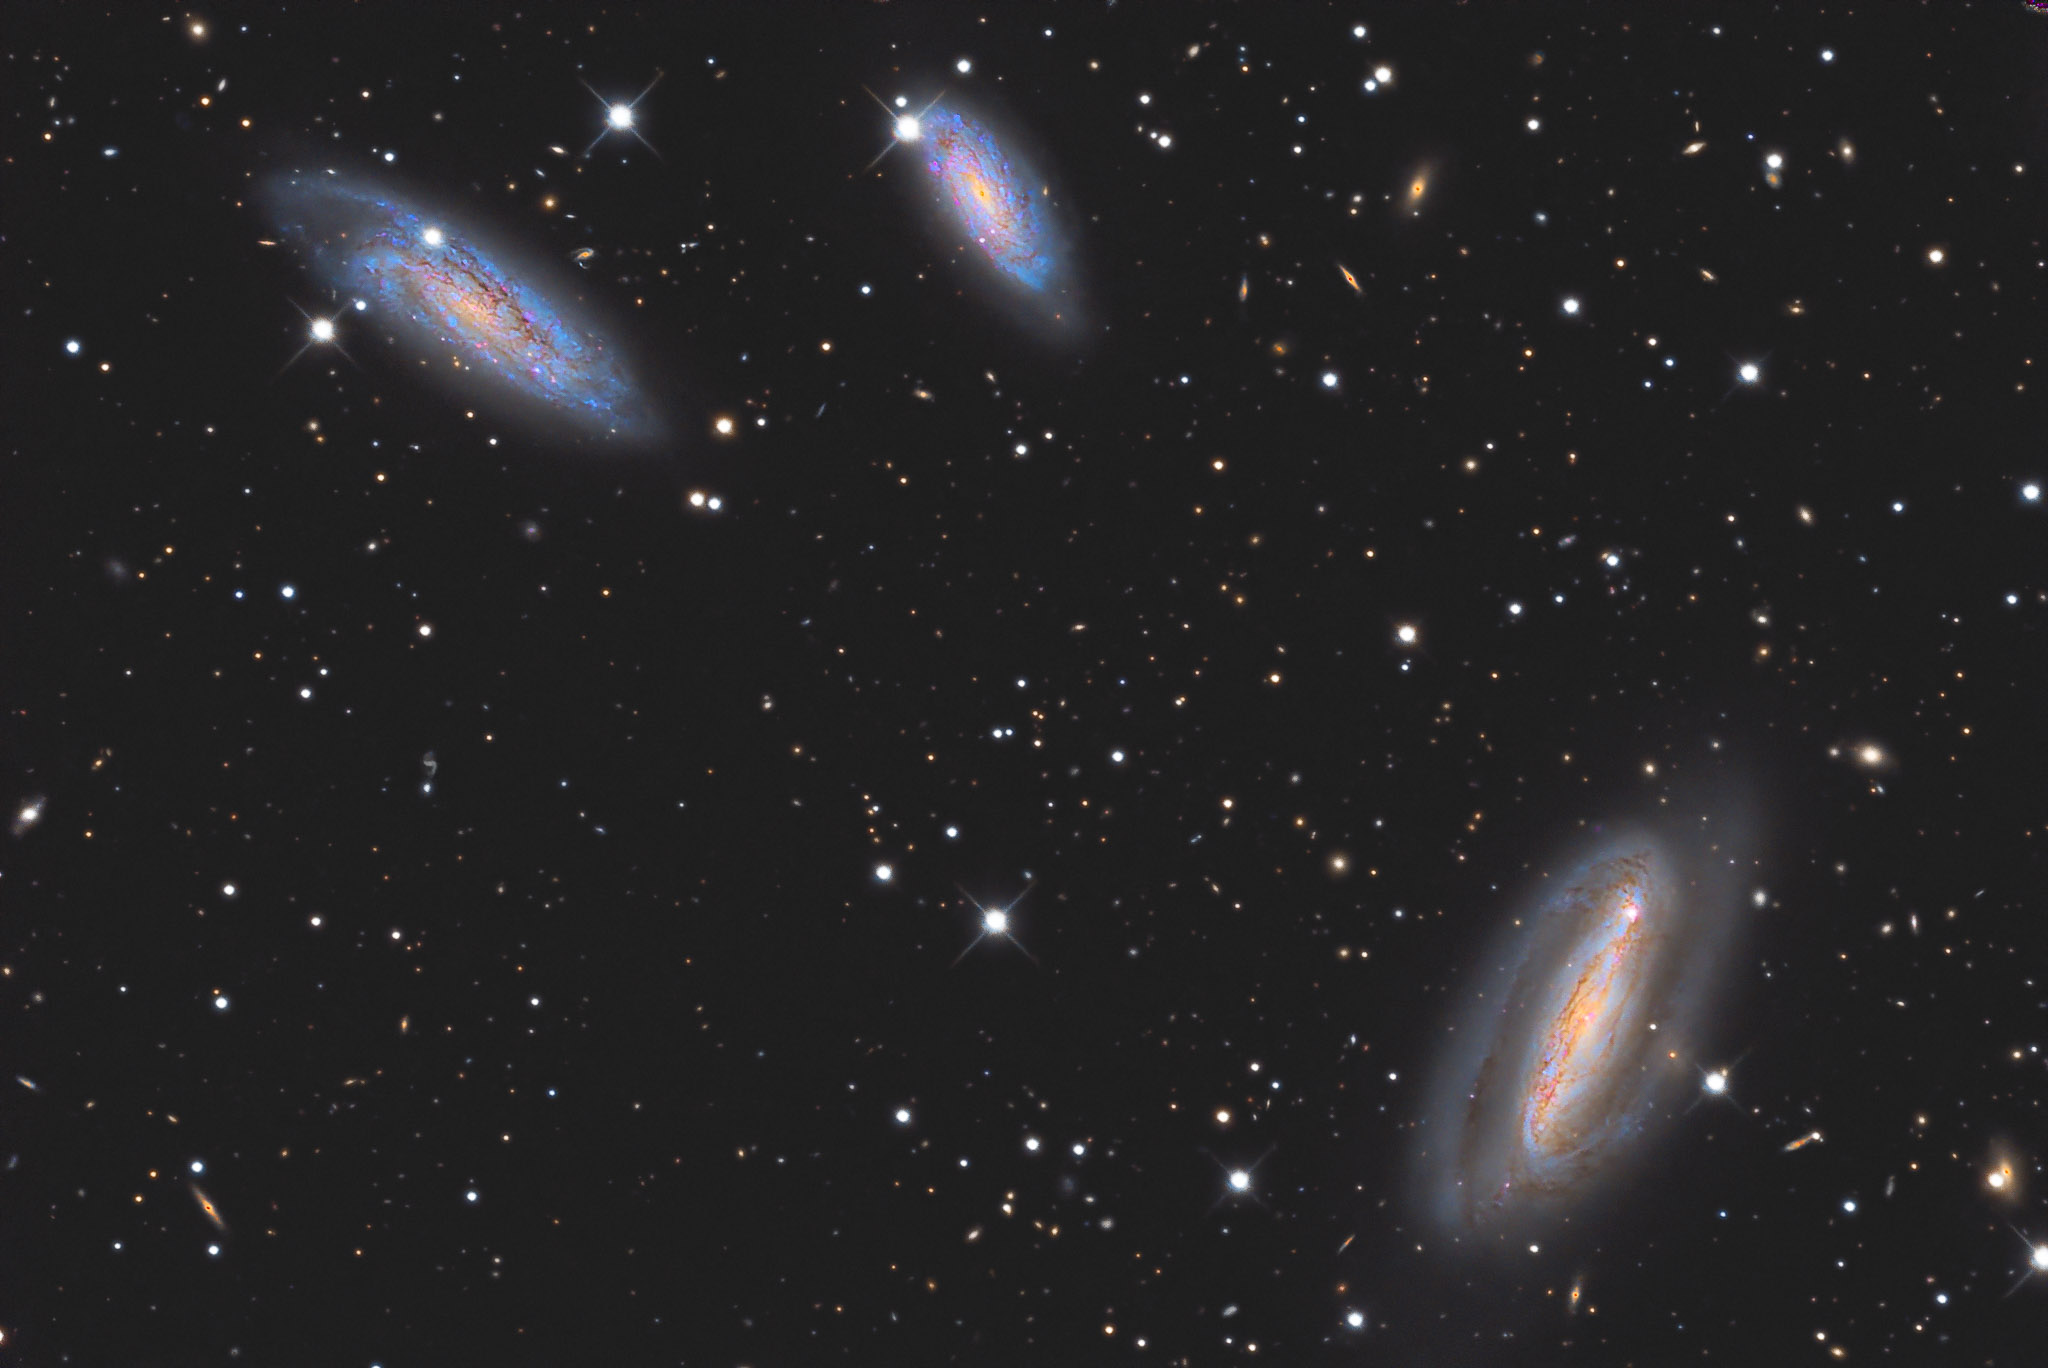 20-inch ritchey-chretien, 7582 - Grus Quartet Galaxies -, 7590, NA, NGC 7599, astrofotografie, astronomie, astronomy, astrophotography, galaxy, grus, grus quartet, hakos, hakos guest farm, ias, ias observatory, ias observatory hakos, khomas, kranich, namibia, spiral galaxy, world